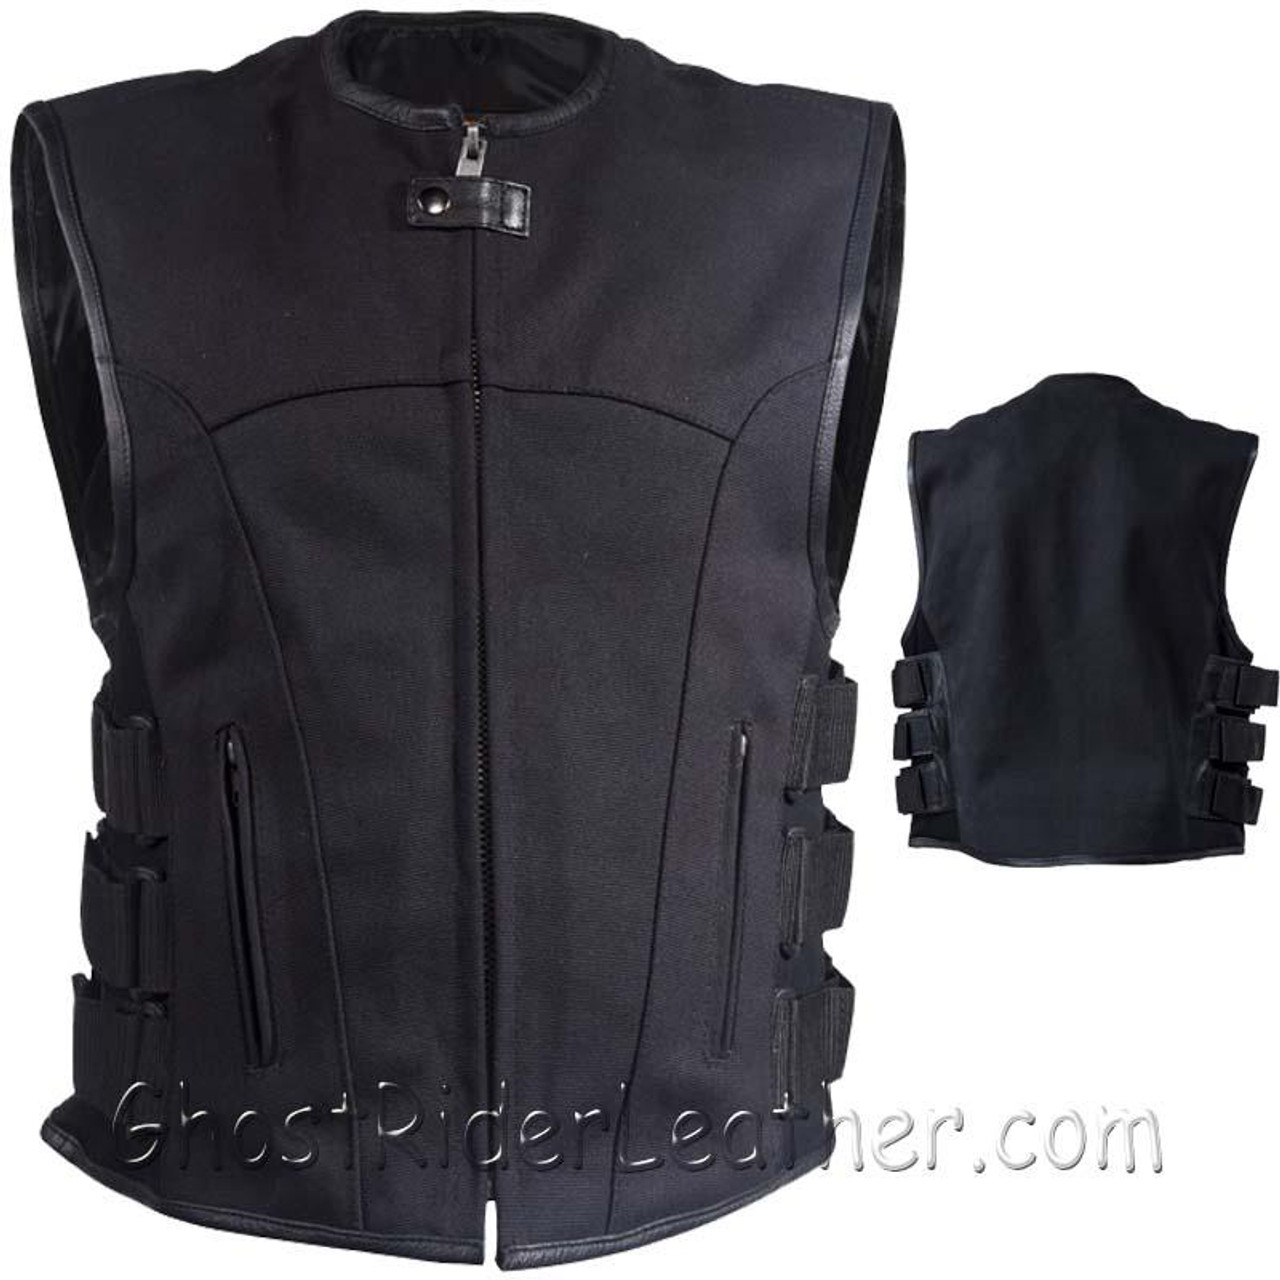 Canvas Motorcycle Vest - Men's - Up To Size 5XL - Gun Pockets - MV315-CV-DL